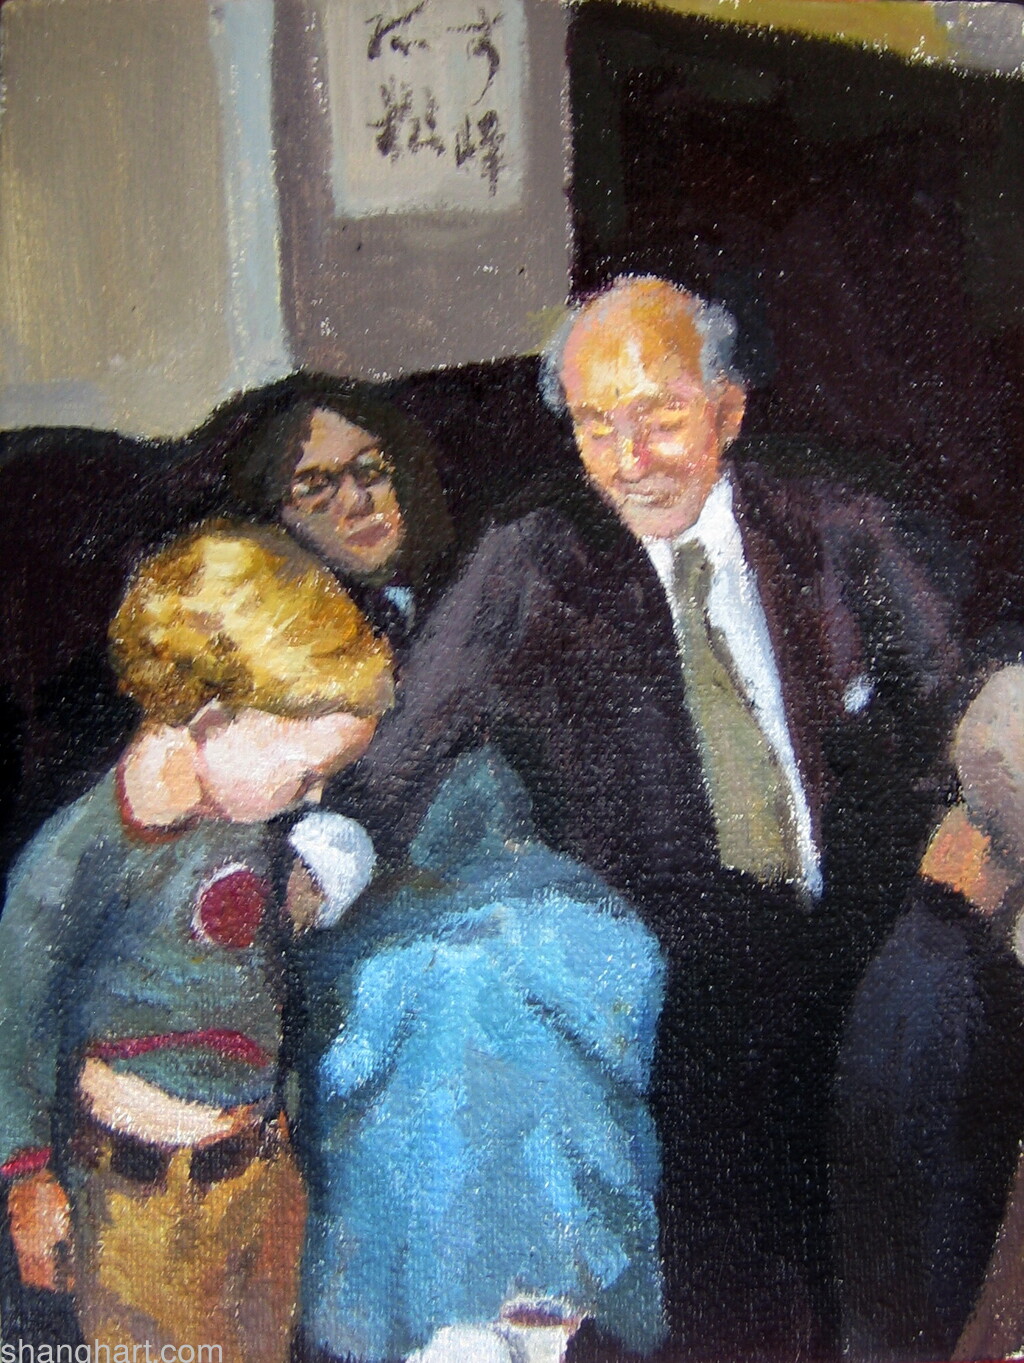 2008, 20x15cm, oil on canvas